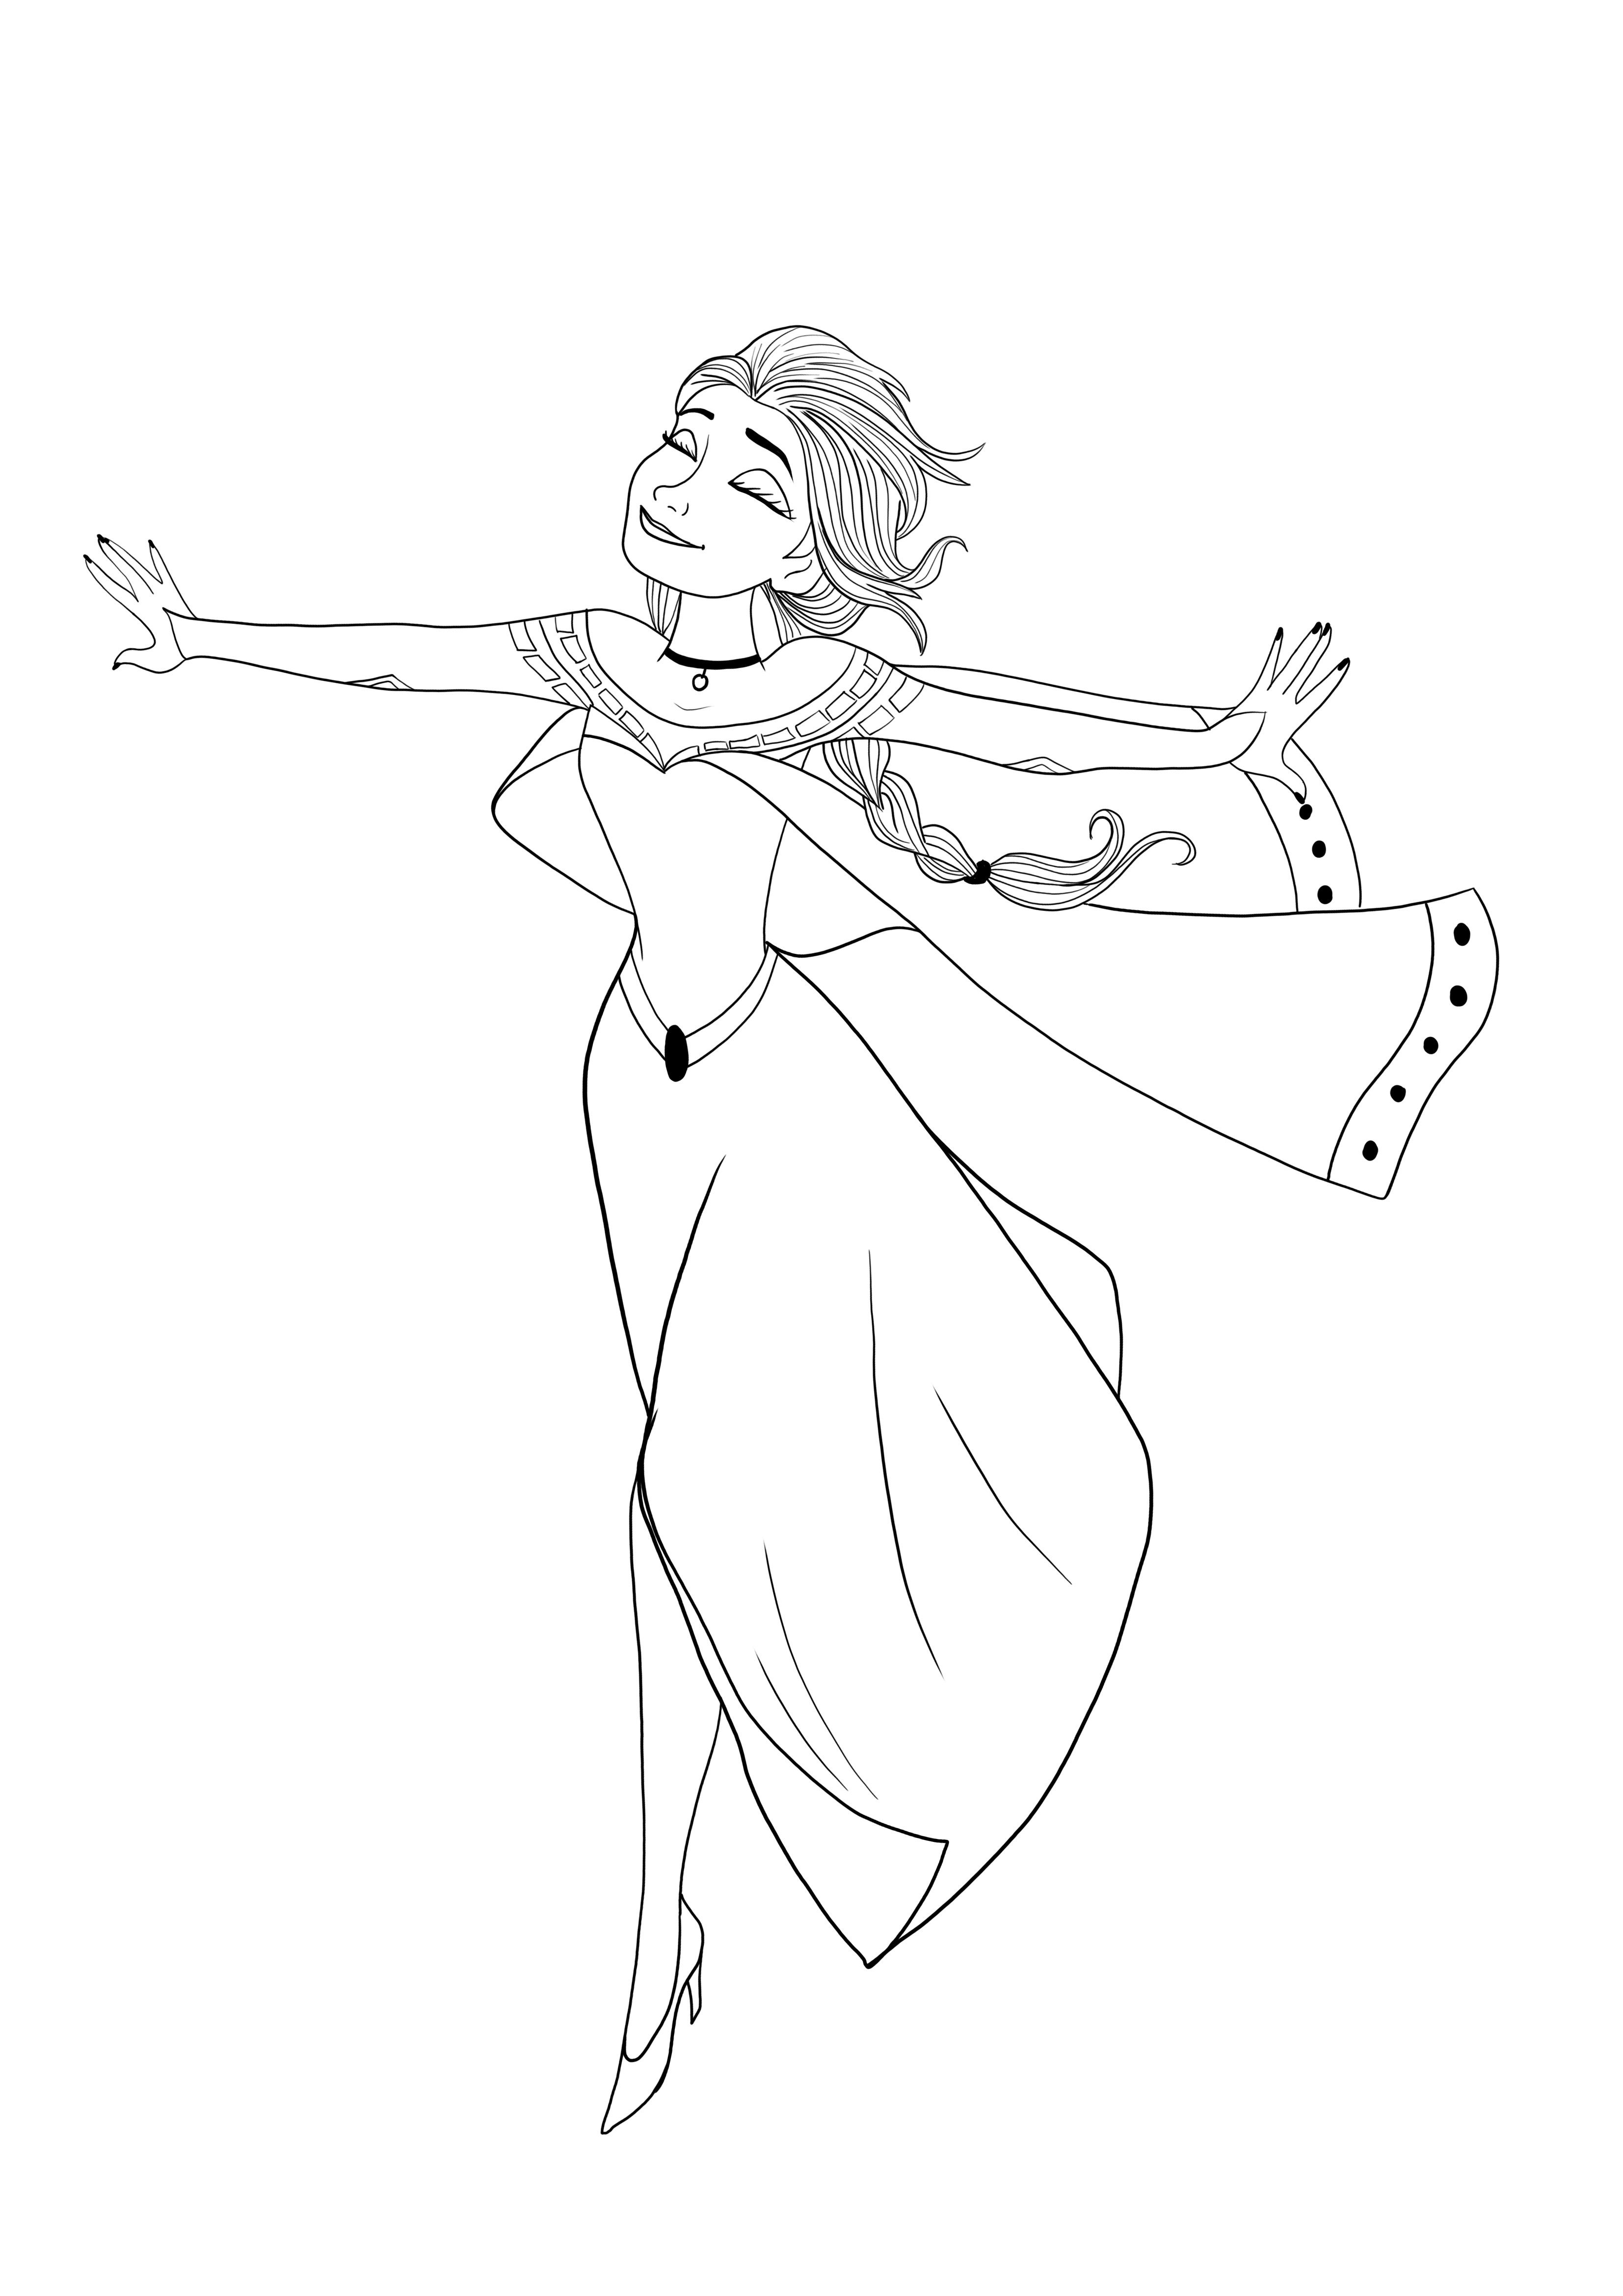 Dibujo de Elsa bailando para colorear e imprimir gratis